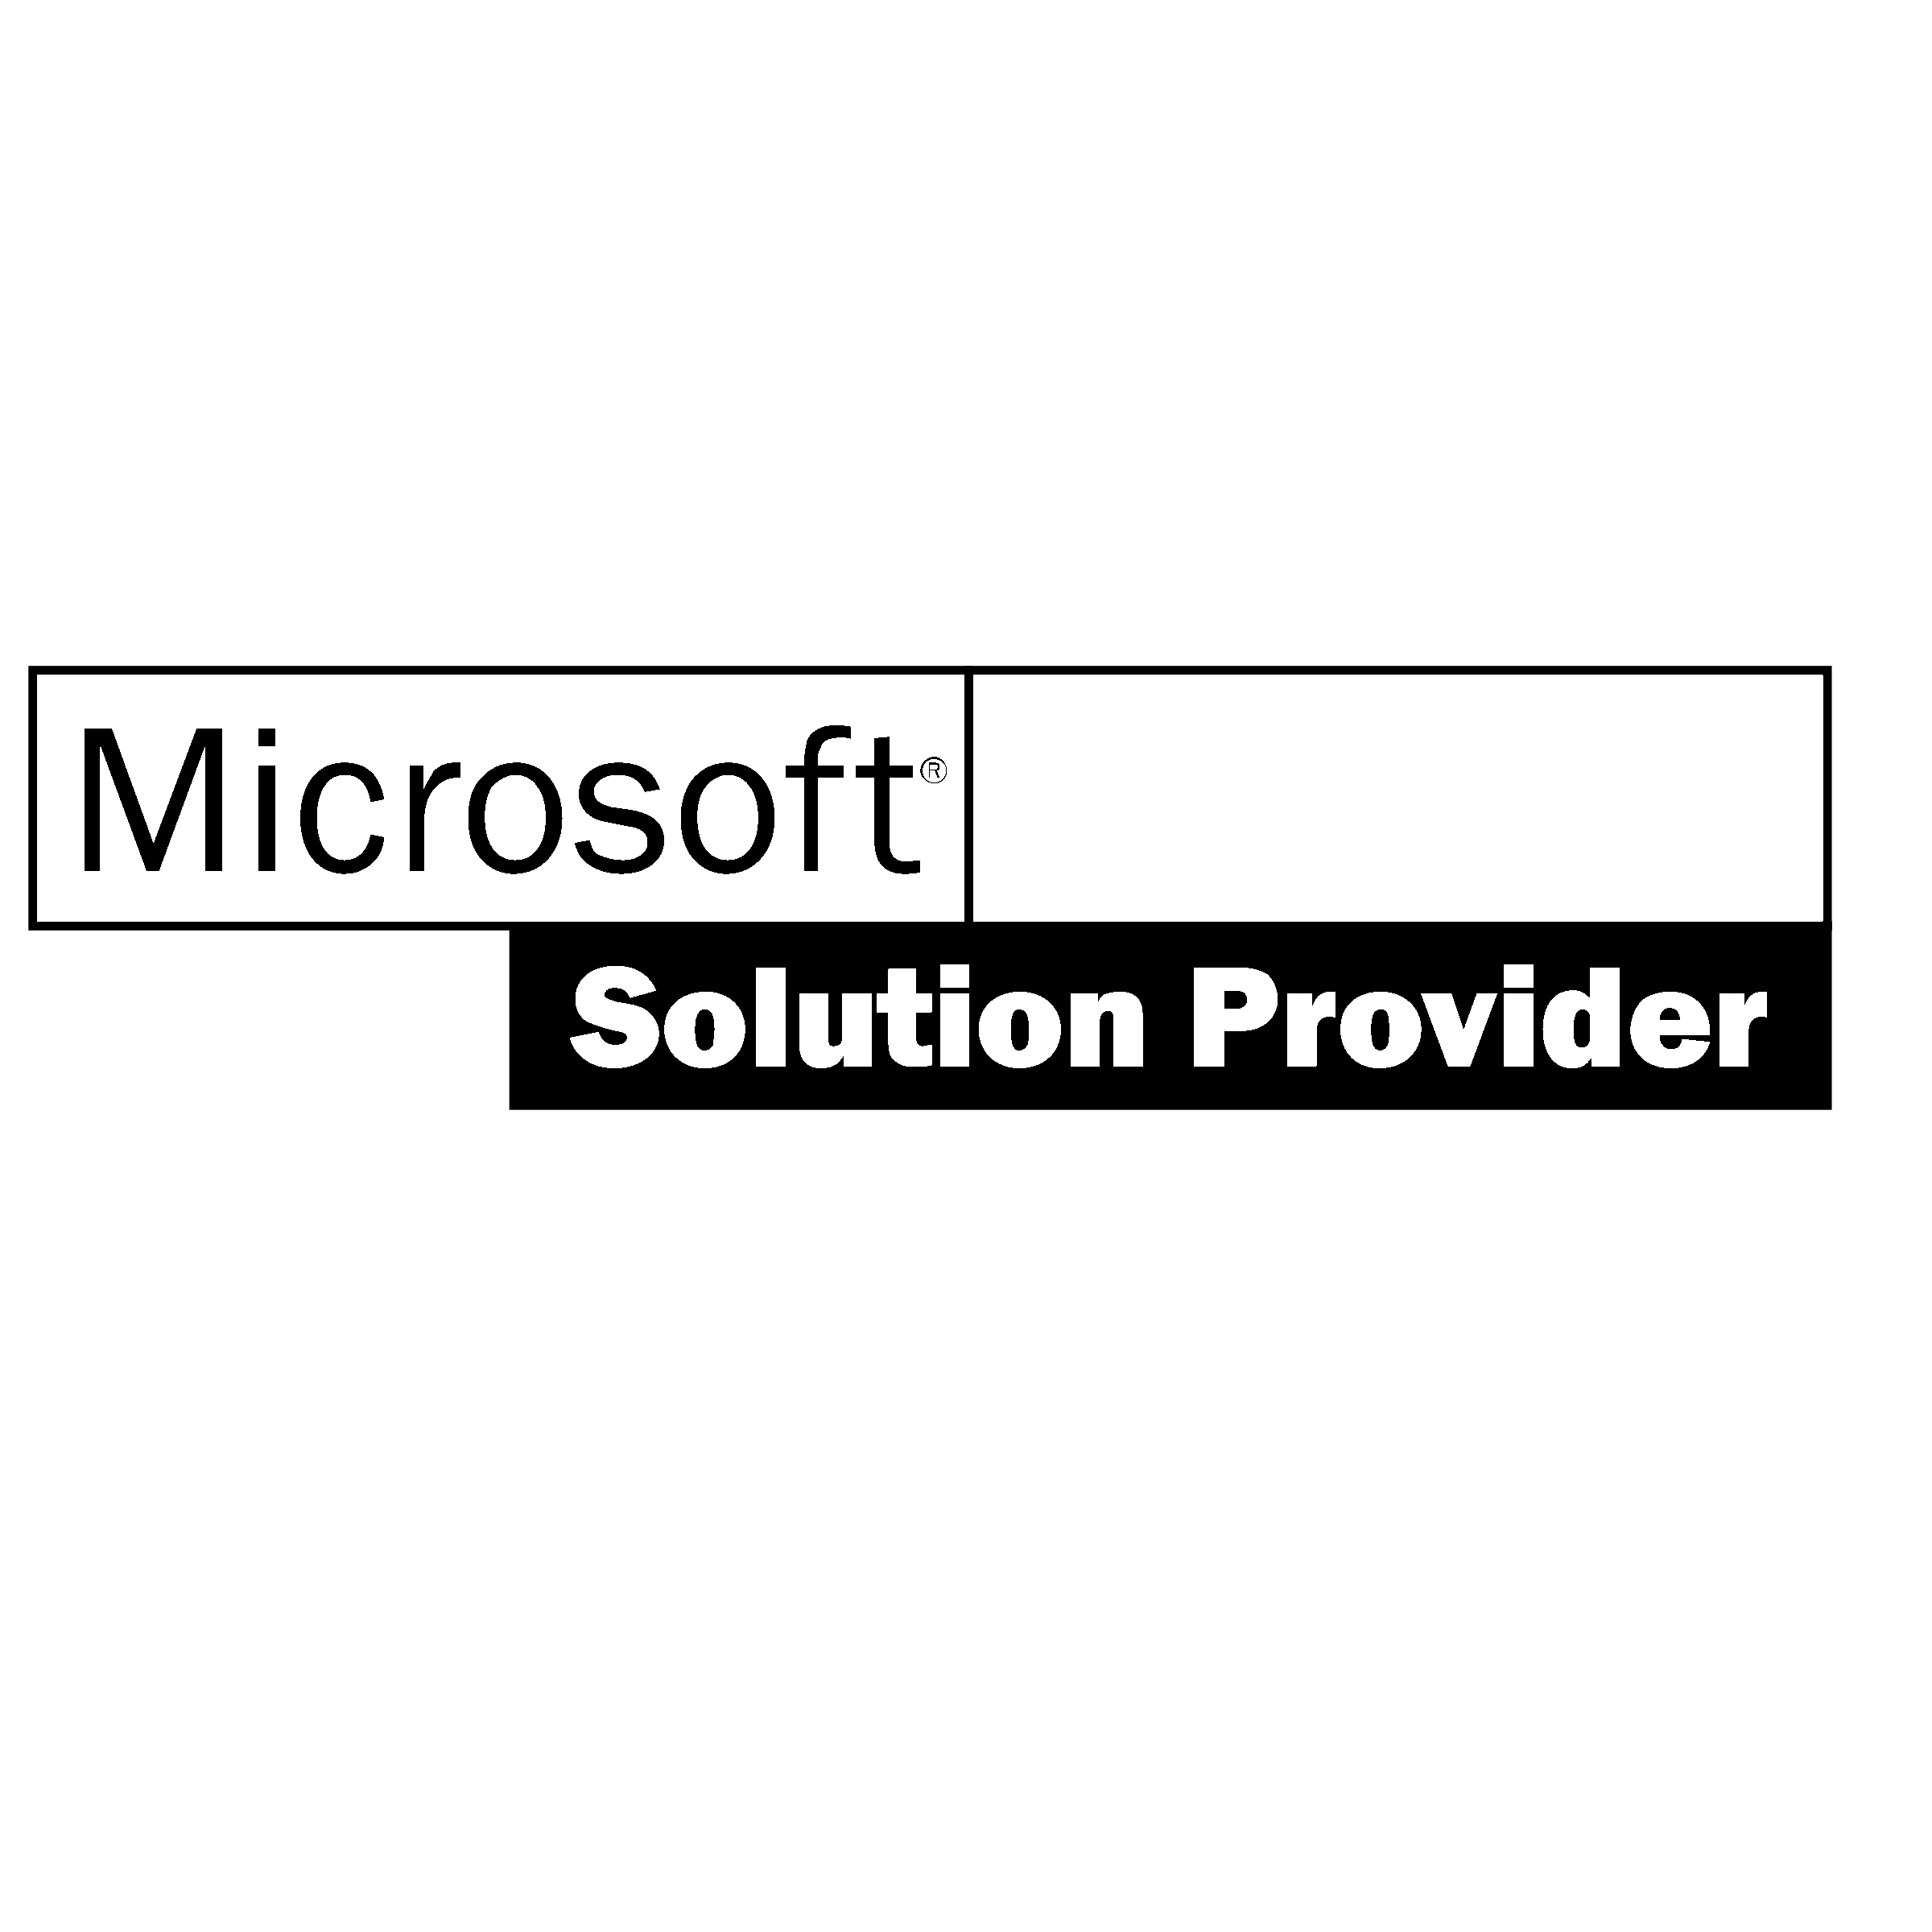 Microsoft Certified Logo - Microsoft Certified Logo PNG Transparent & SVG Vector - Freebie Supply